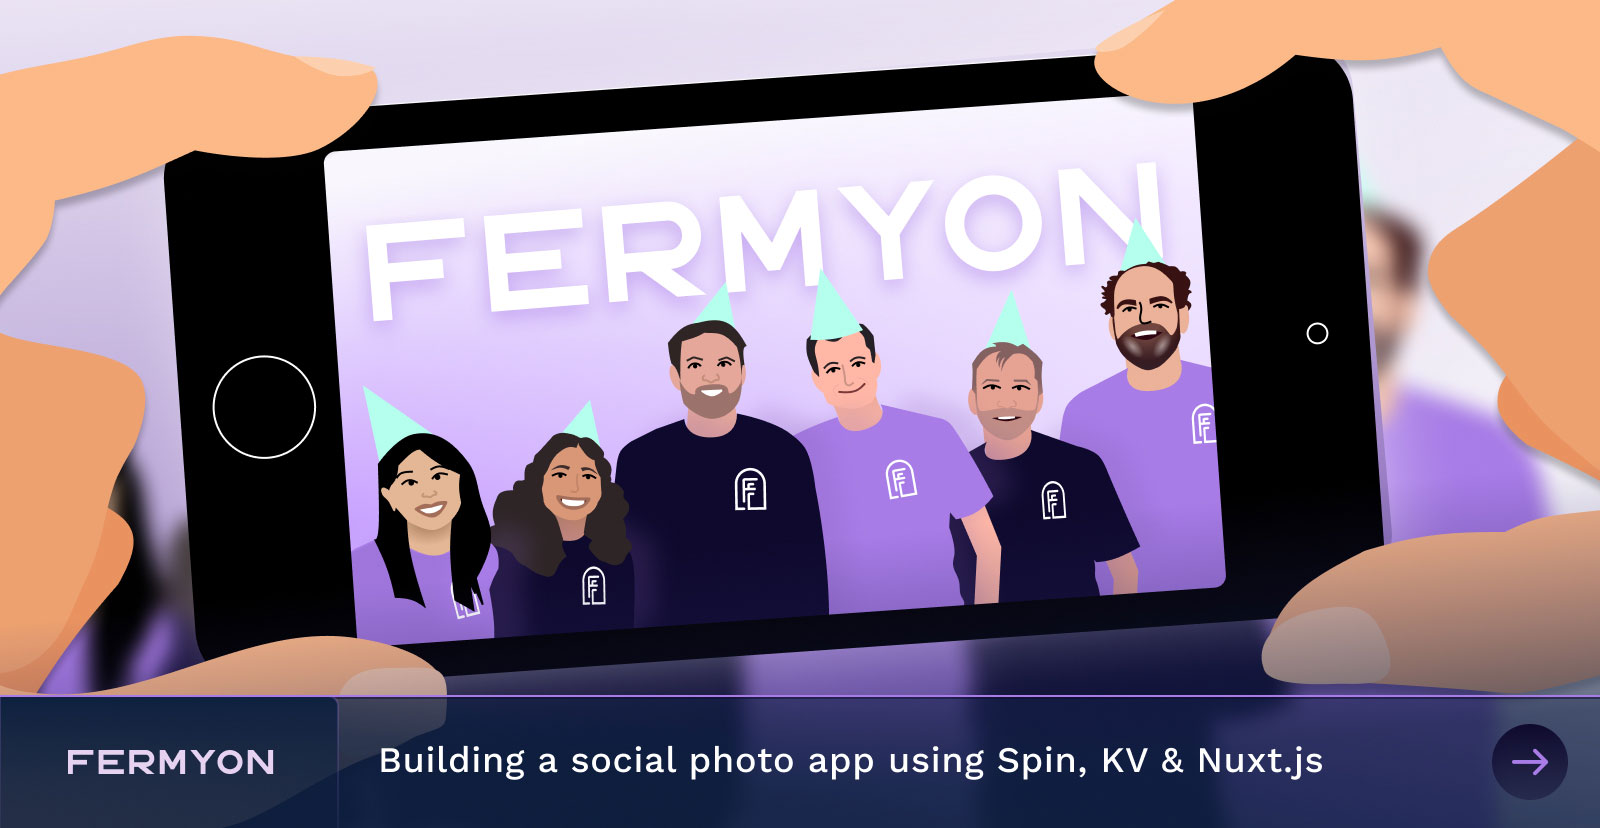 Building a social photo app using Spin, KV & Nuxt.js